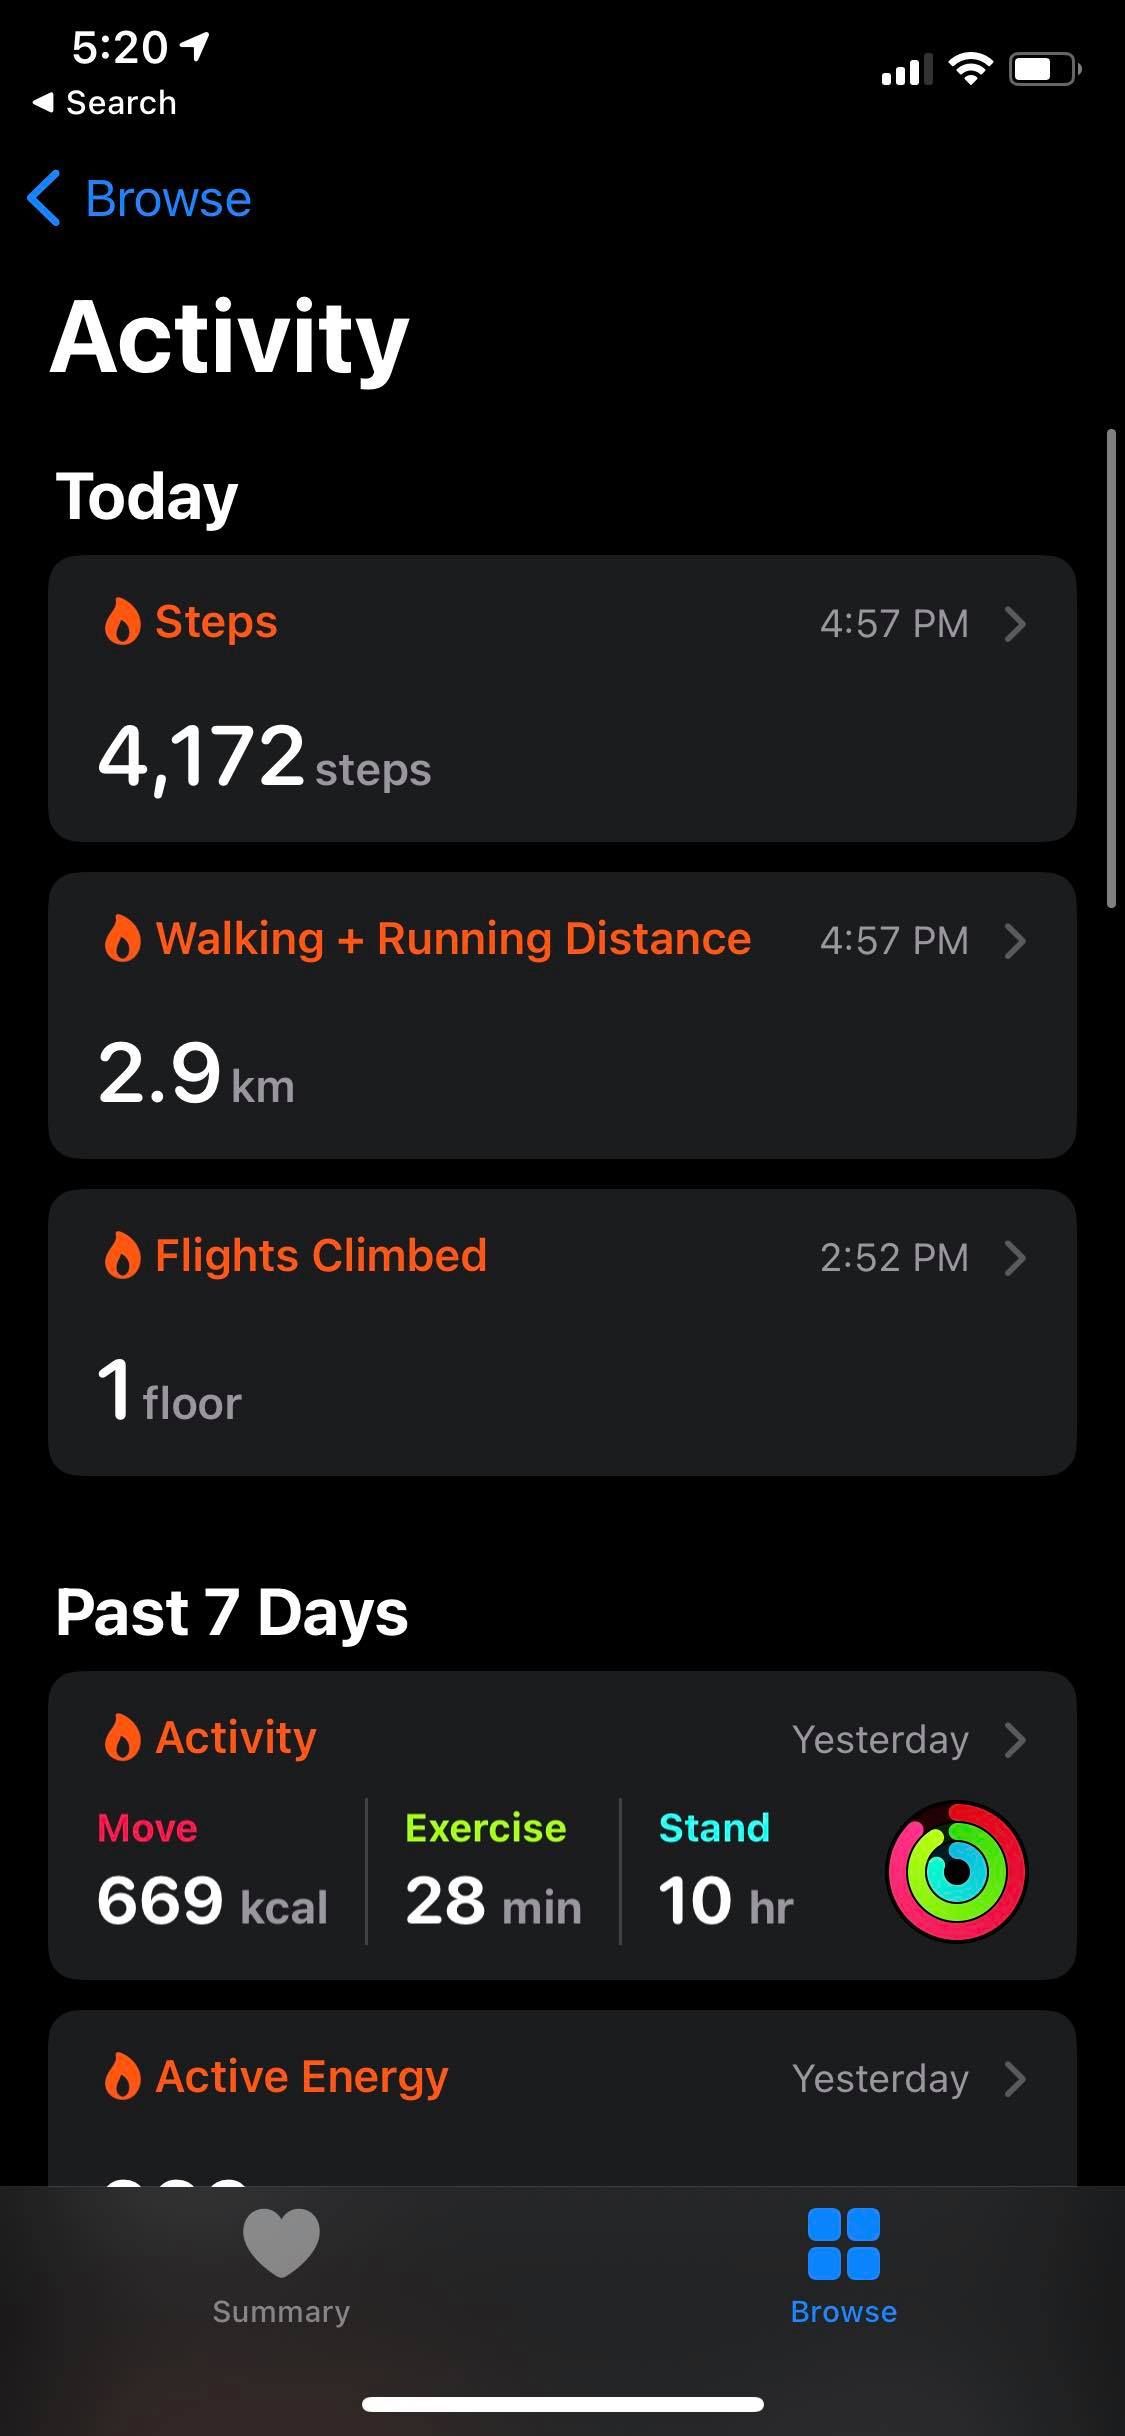 iPhone Health App Screenshot showing Activity Summary